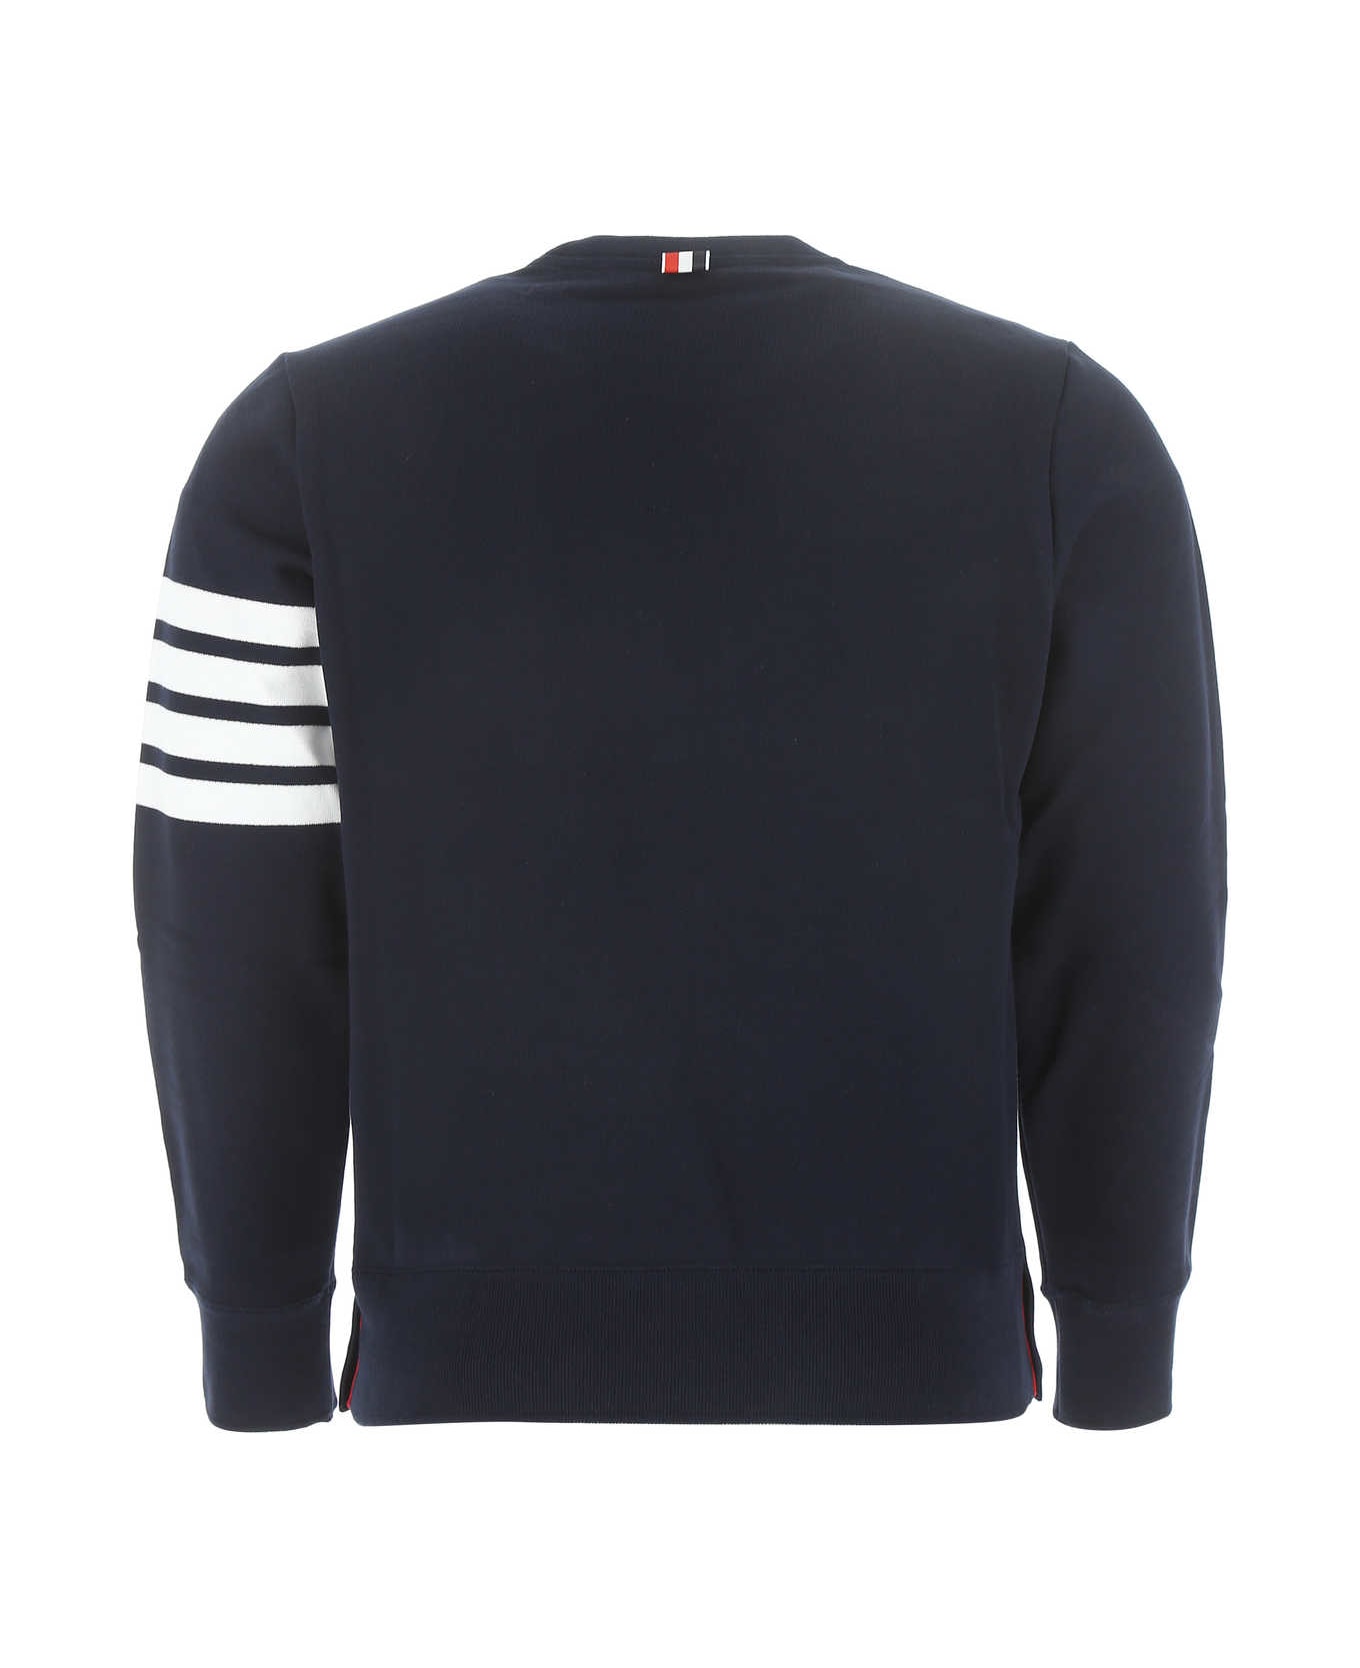 Thom Browne Navy Blue Cotton Sweatshirt - 461